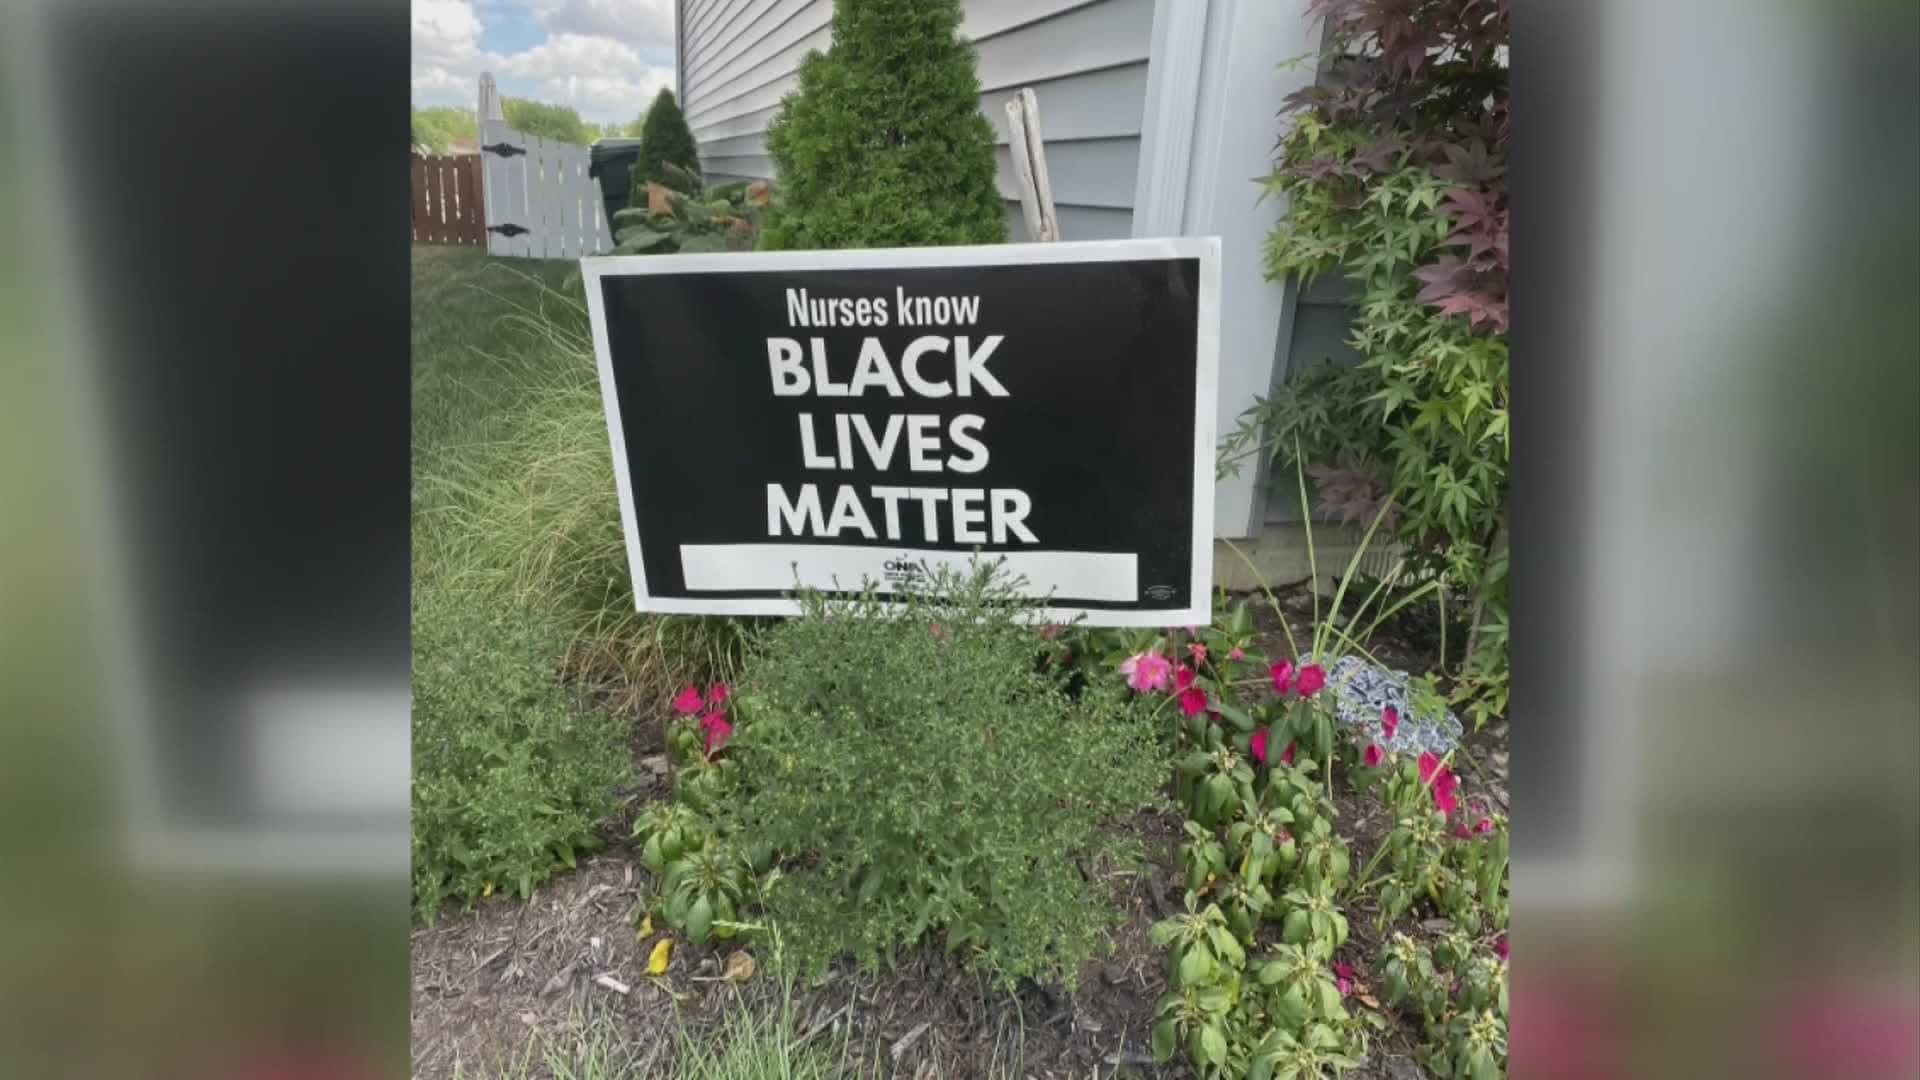 Galloway Neighbors Say Hoa Targeting Black Lives Matter Yard Displays